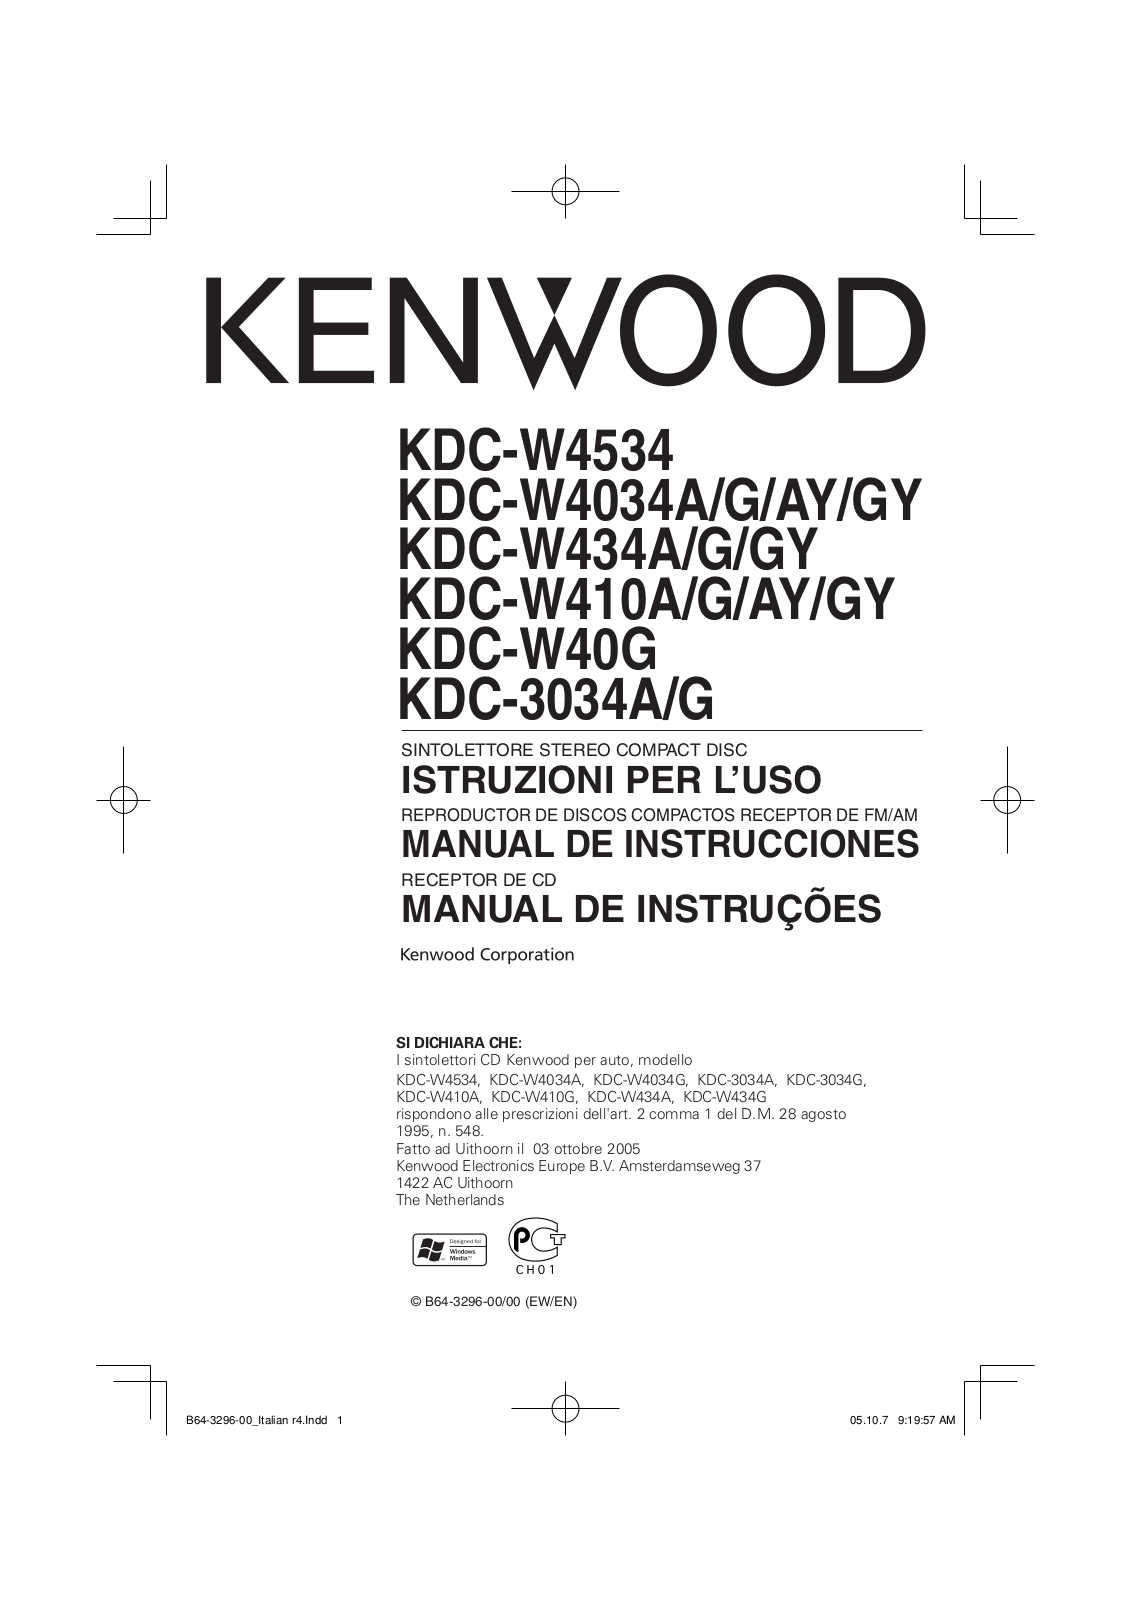 Kenwood KDC-W4034, KDC-3034, KDC-W4534, KDC-W410, KDC-W40G Manual